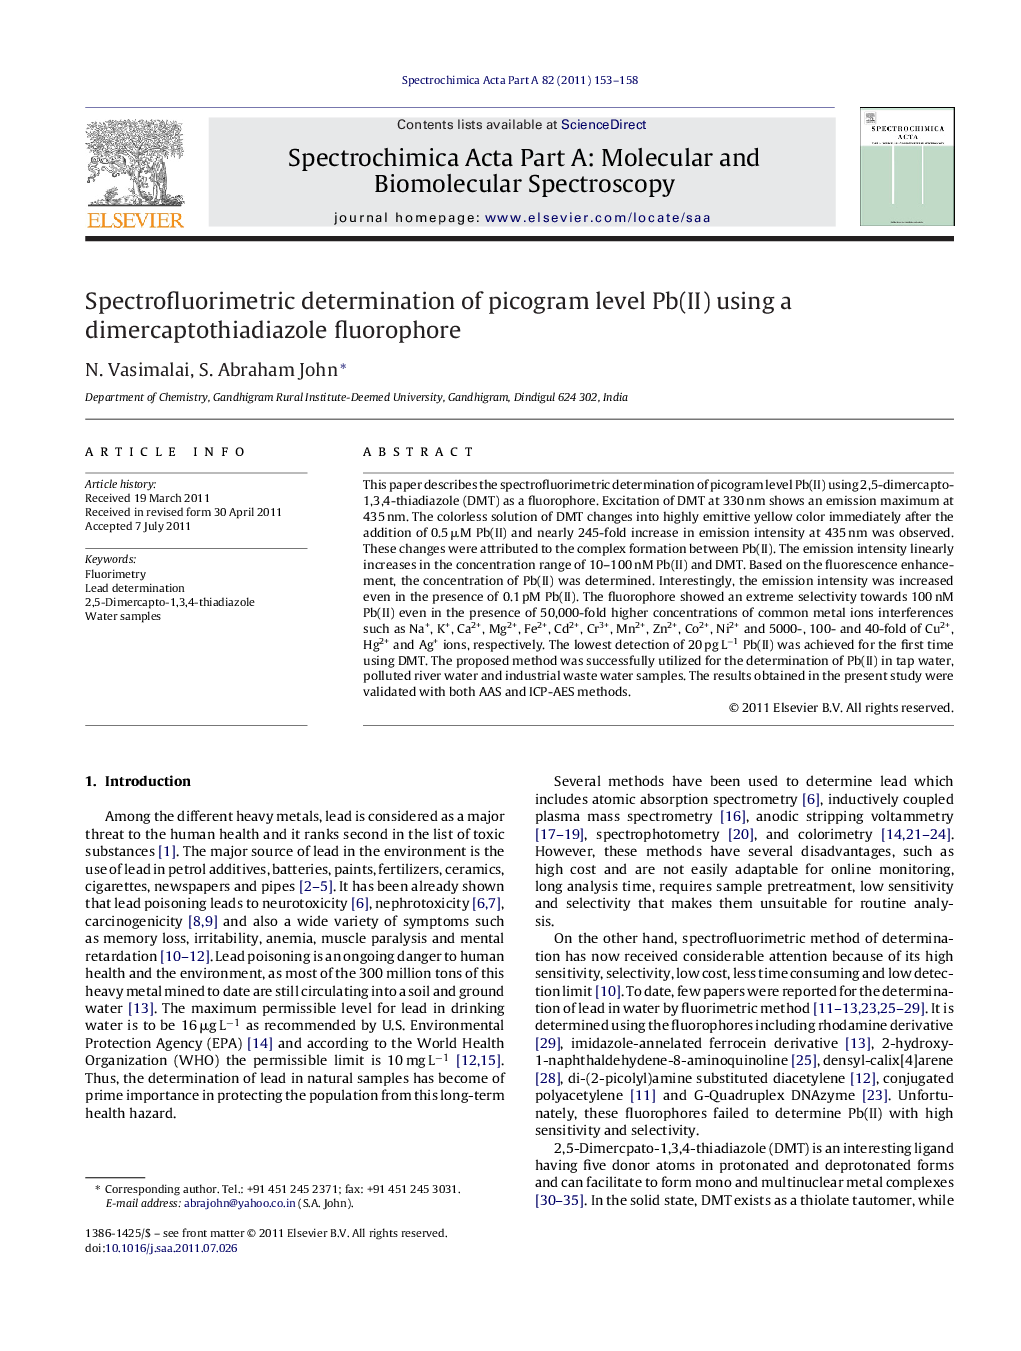 Spectrofluorimetric determination of picogram level Pb(II) using a dimercaptothiadiazole fluorophore